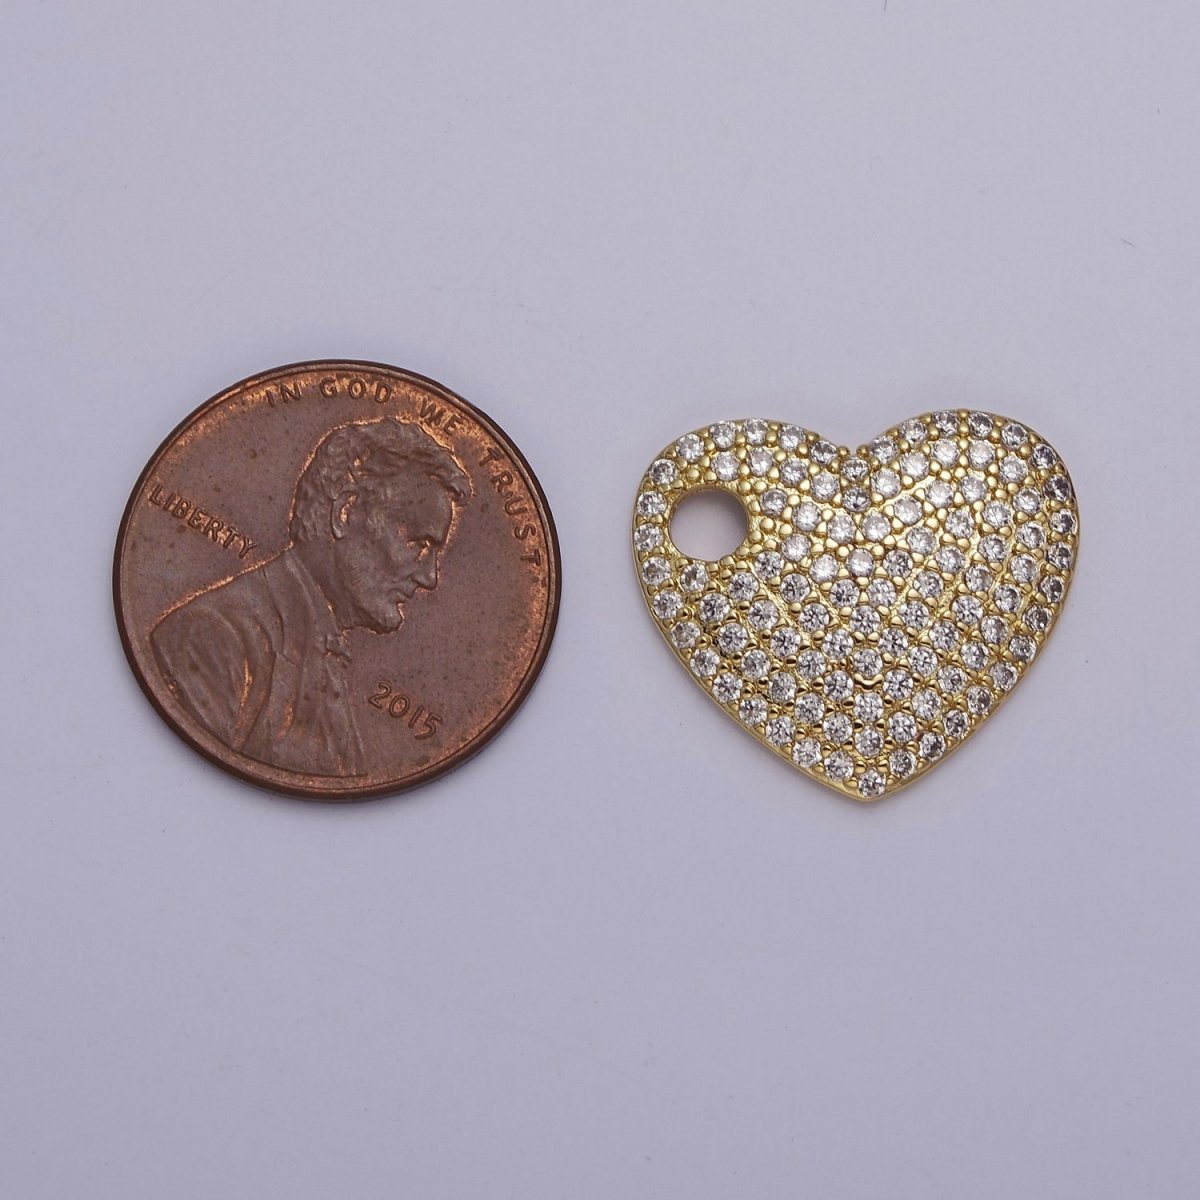 Gold CZ Heart Charm 17x19mm Pendant, Layered Necklace Bracelet Earring Pendant Dangle heart charm J-315 - DLUXCA